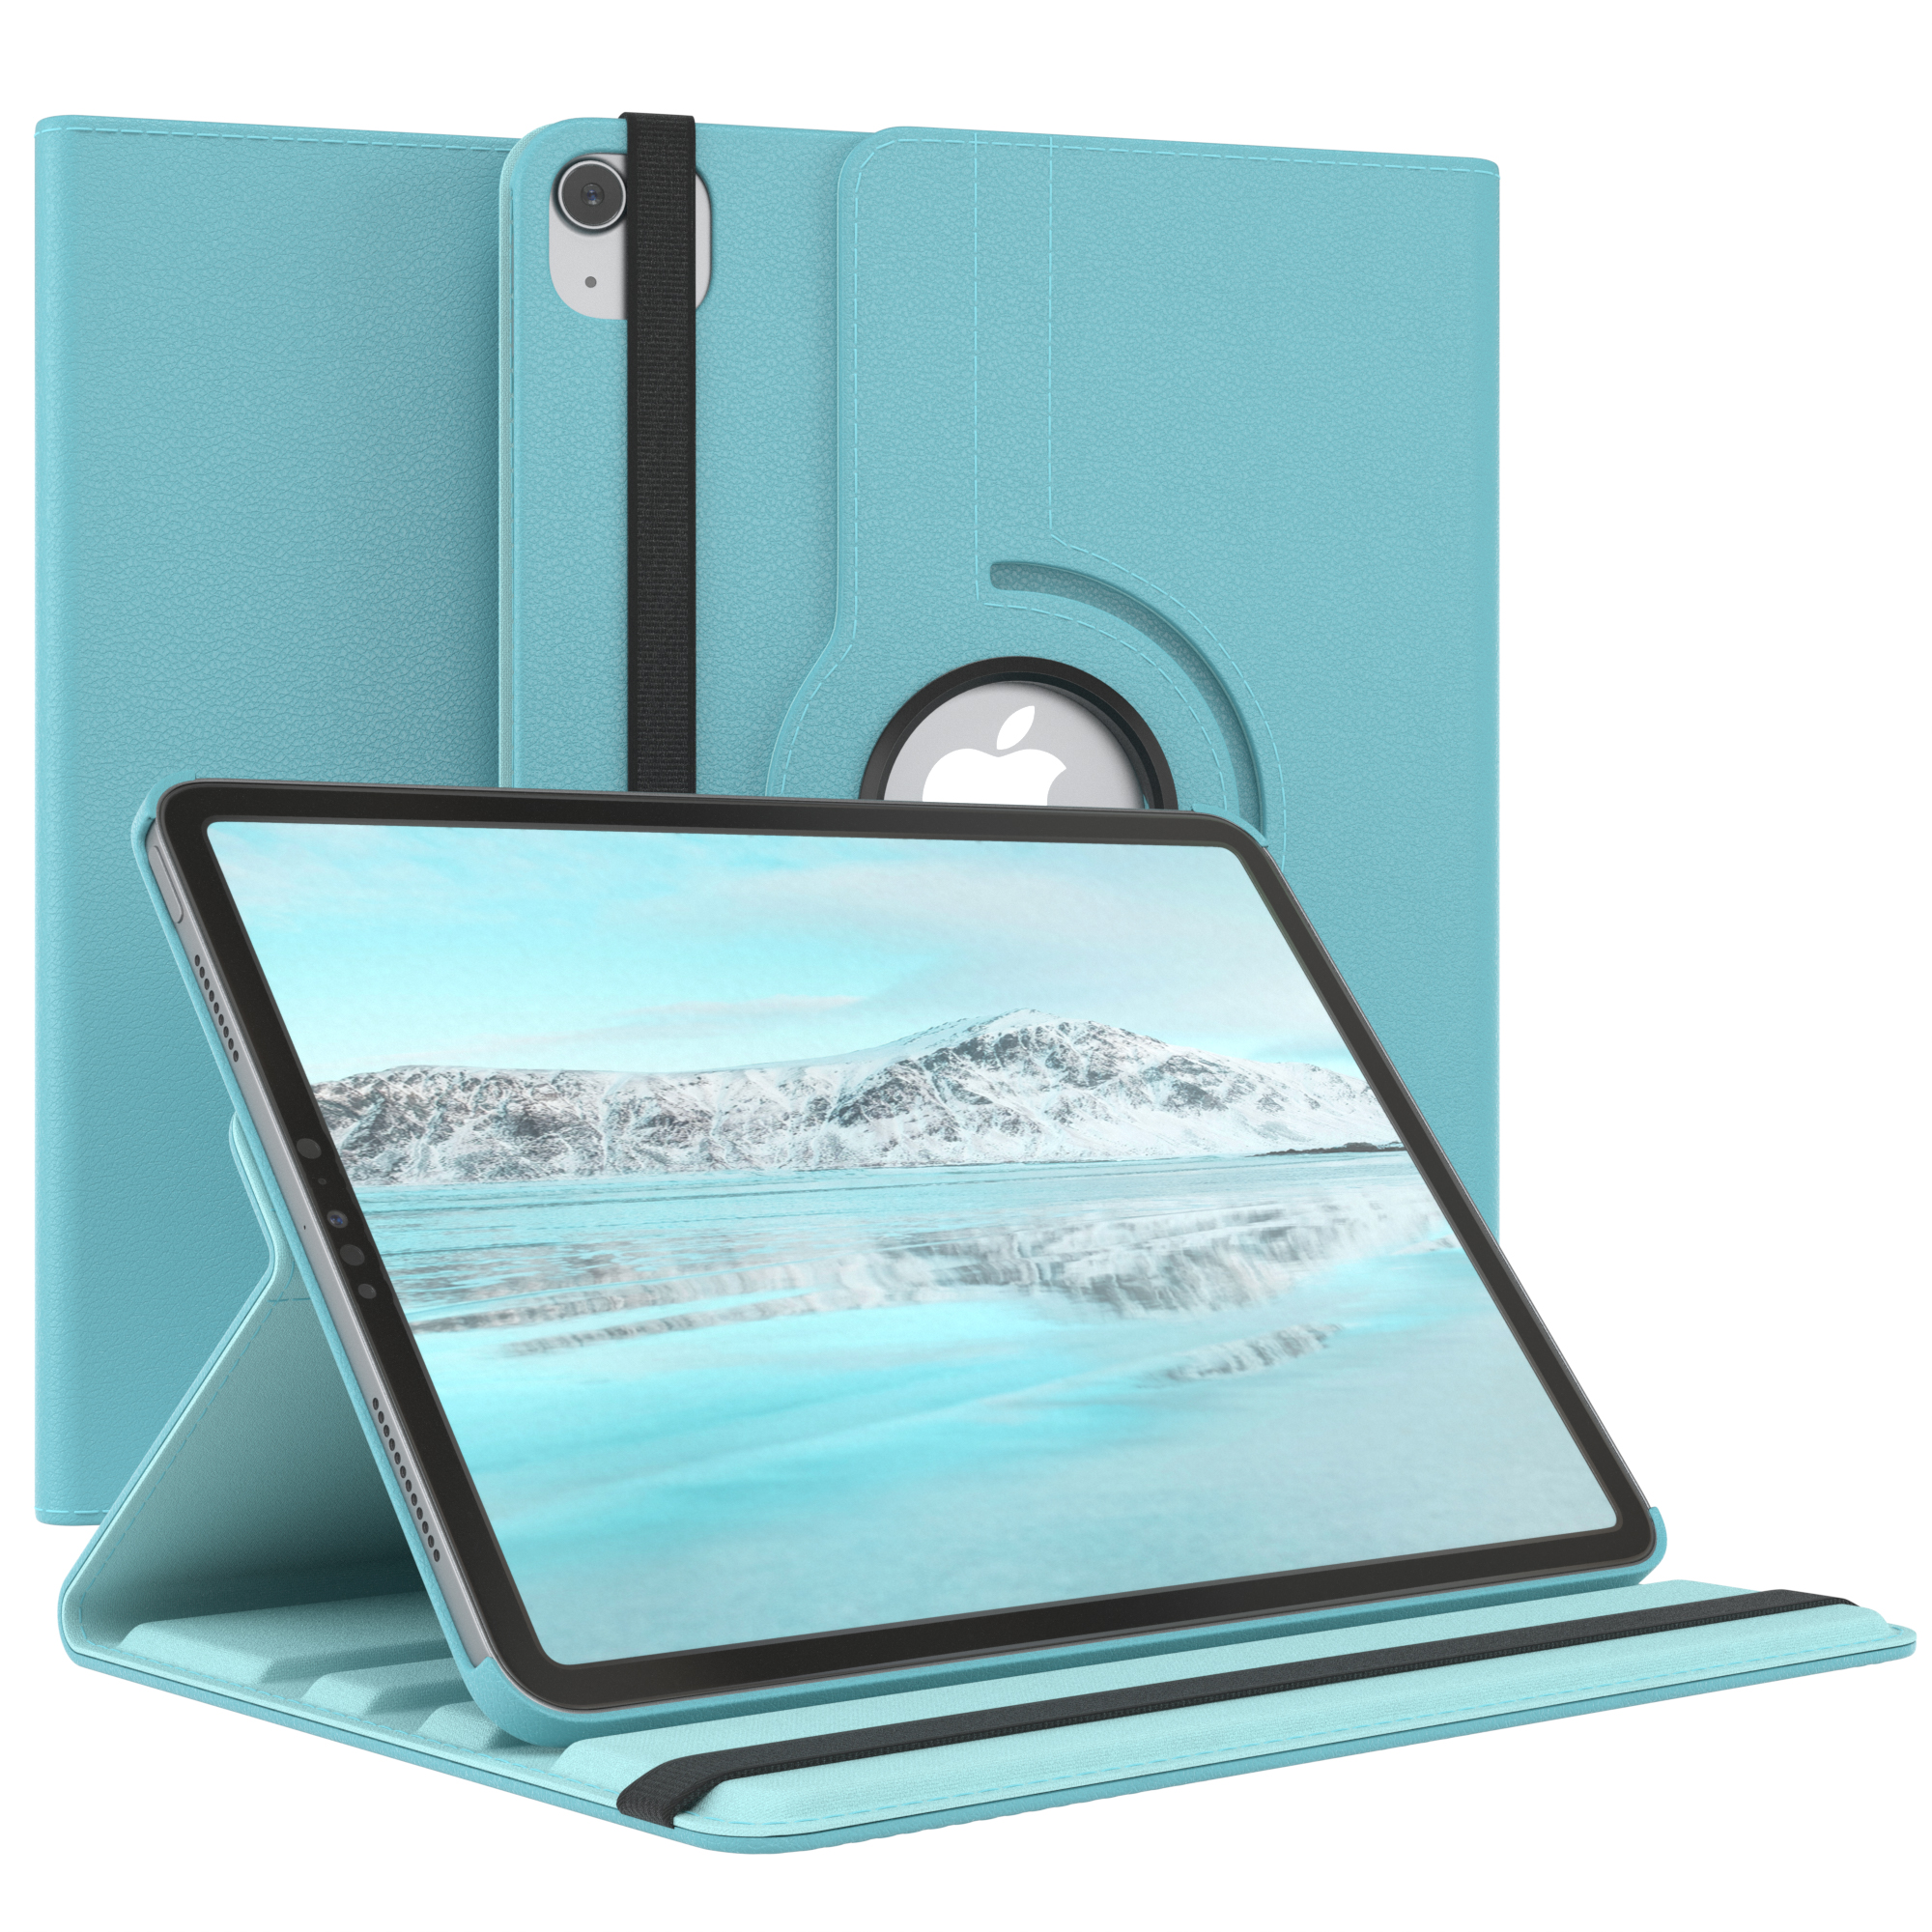 EAZY CASE Schutzhülle Rotationcase 2020 / Tablethülle Bookcover 2022 für 5 Blau iPad Kunstleder, 10.9\